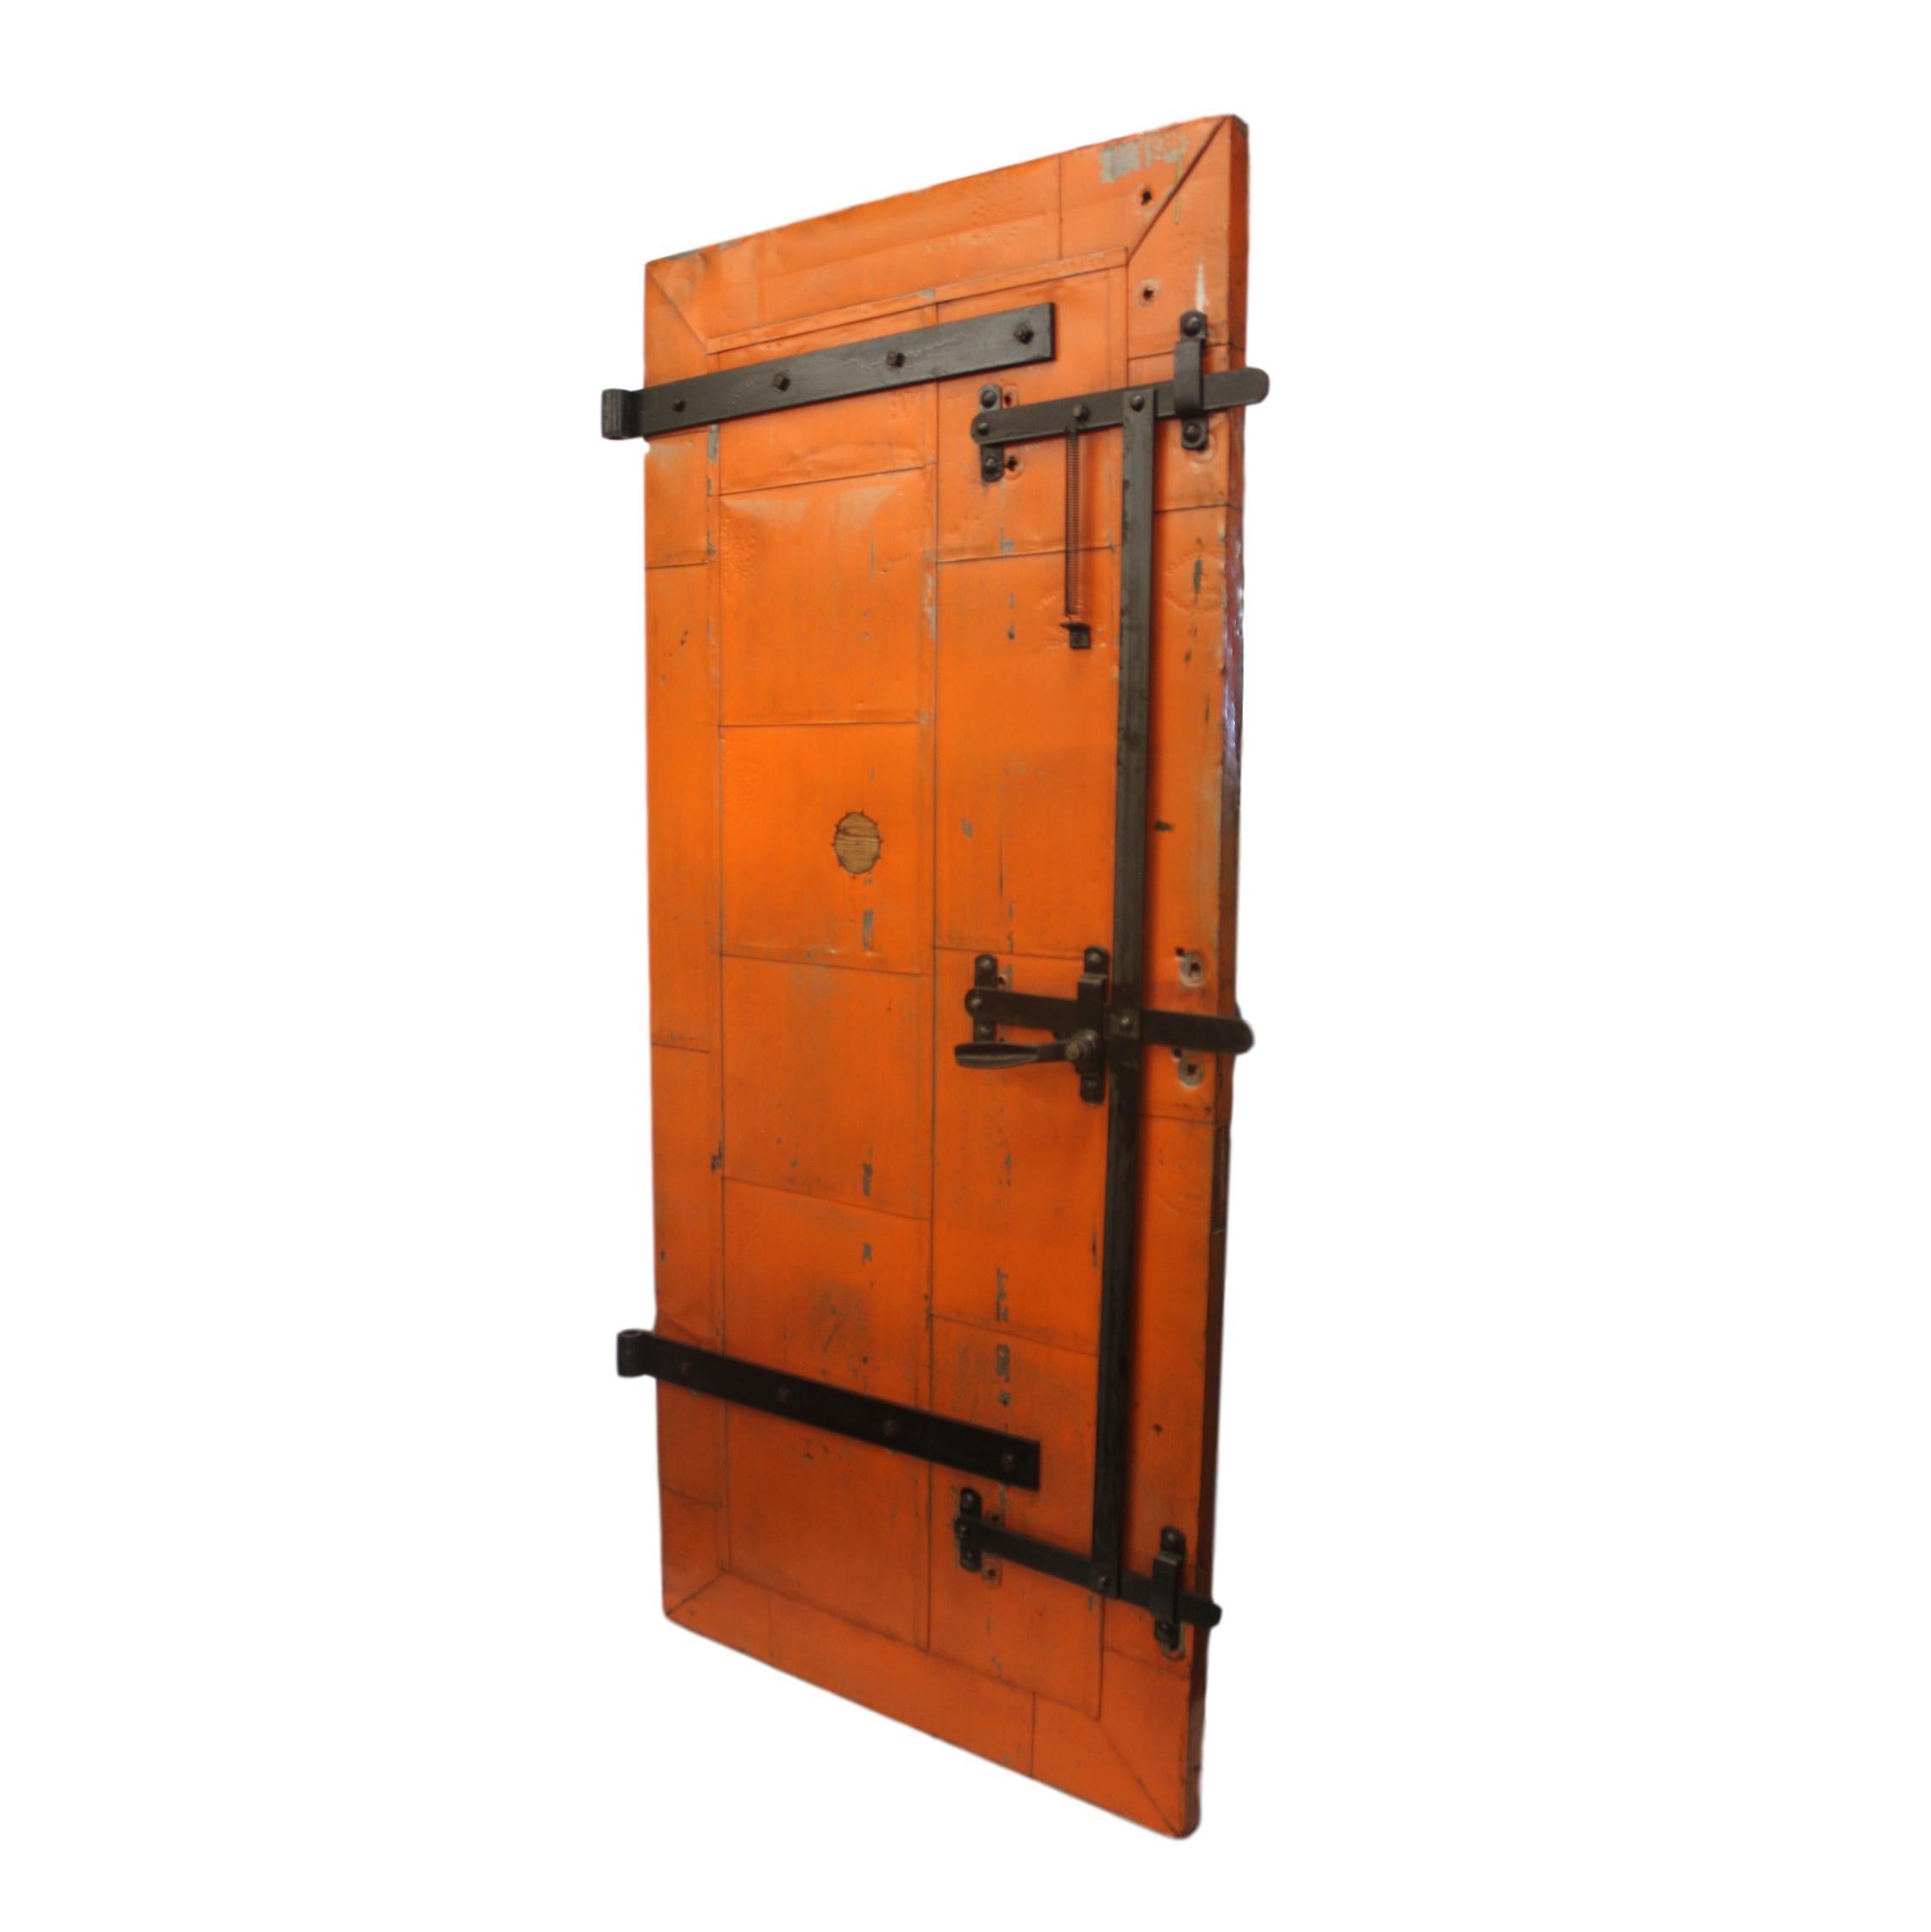 Vintage Orange Industrial Steel Plate Fire Door from 1915 Print Factory